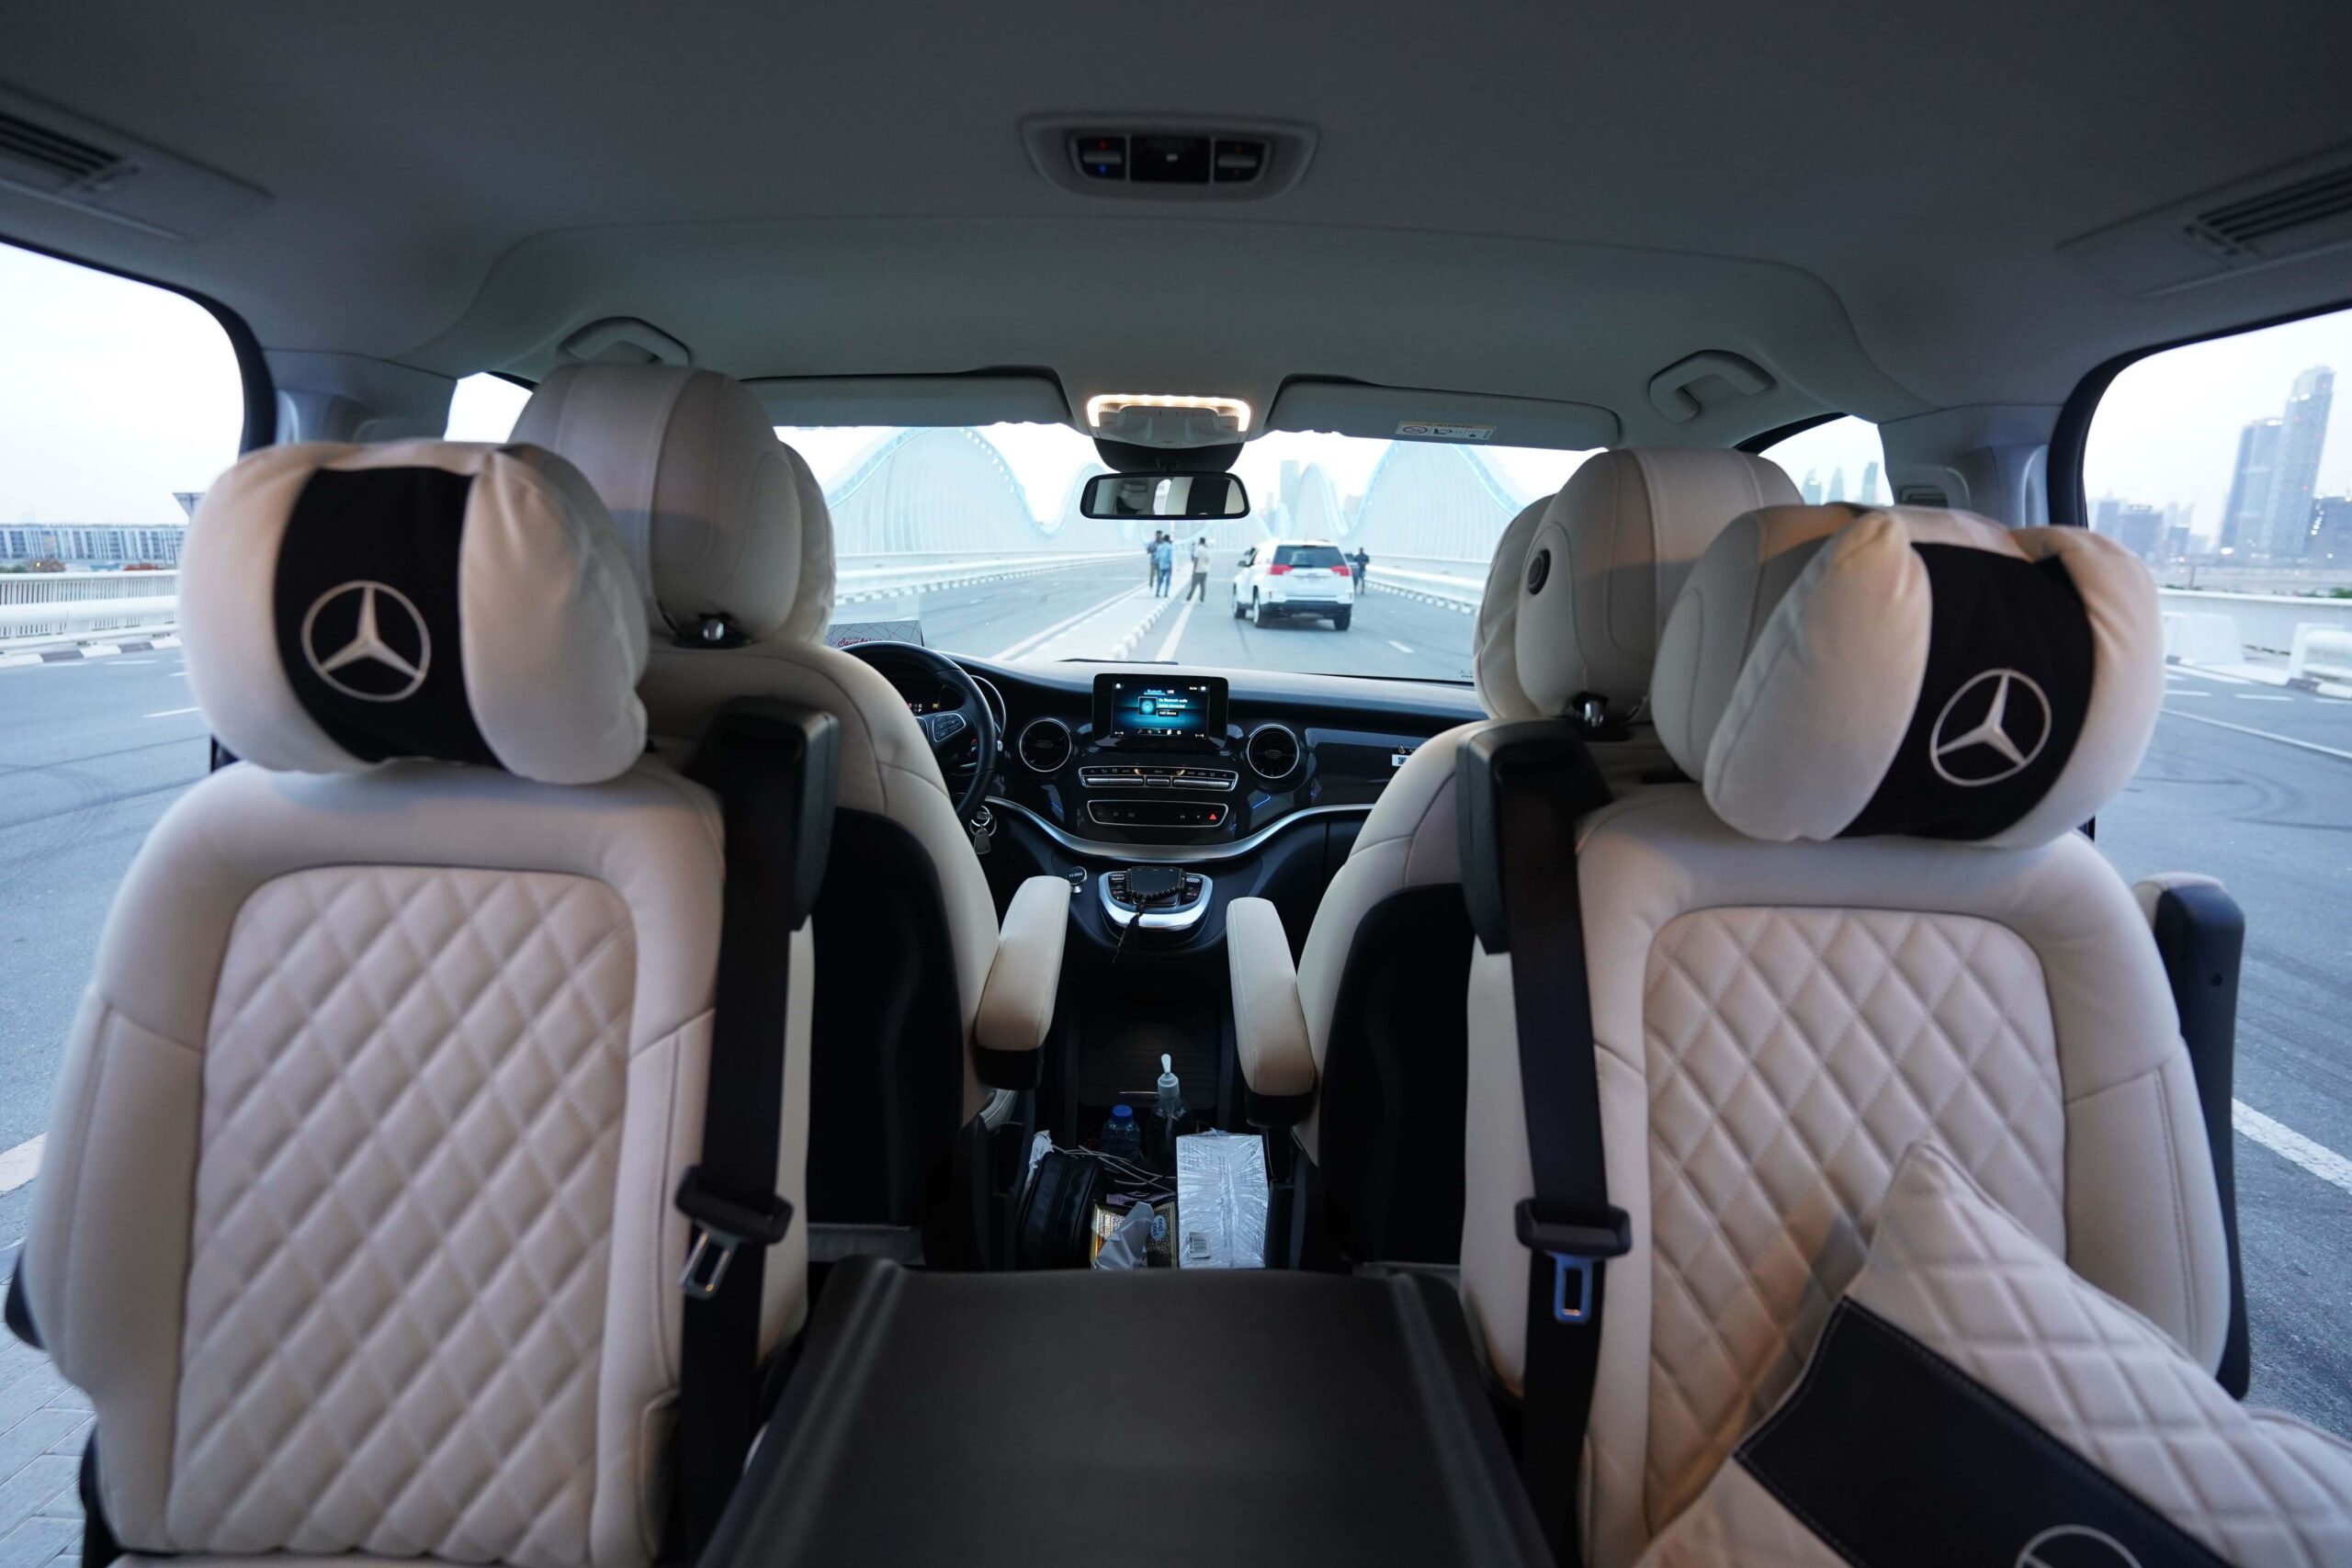 Mercedes Benz V Class inside back - The Best Limousine Service In Dubai